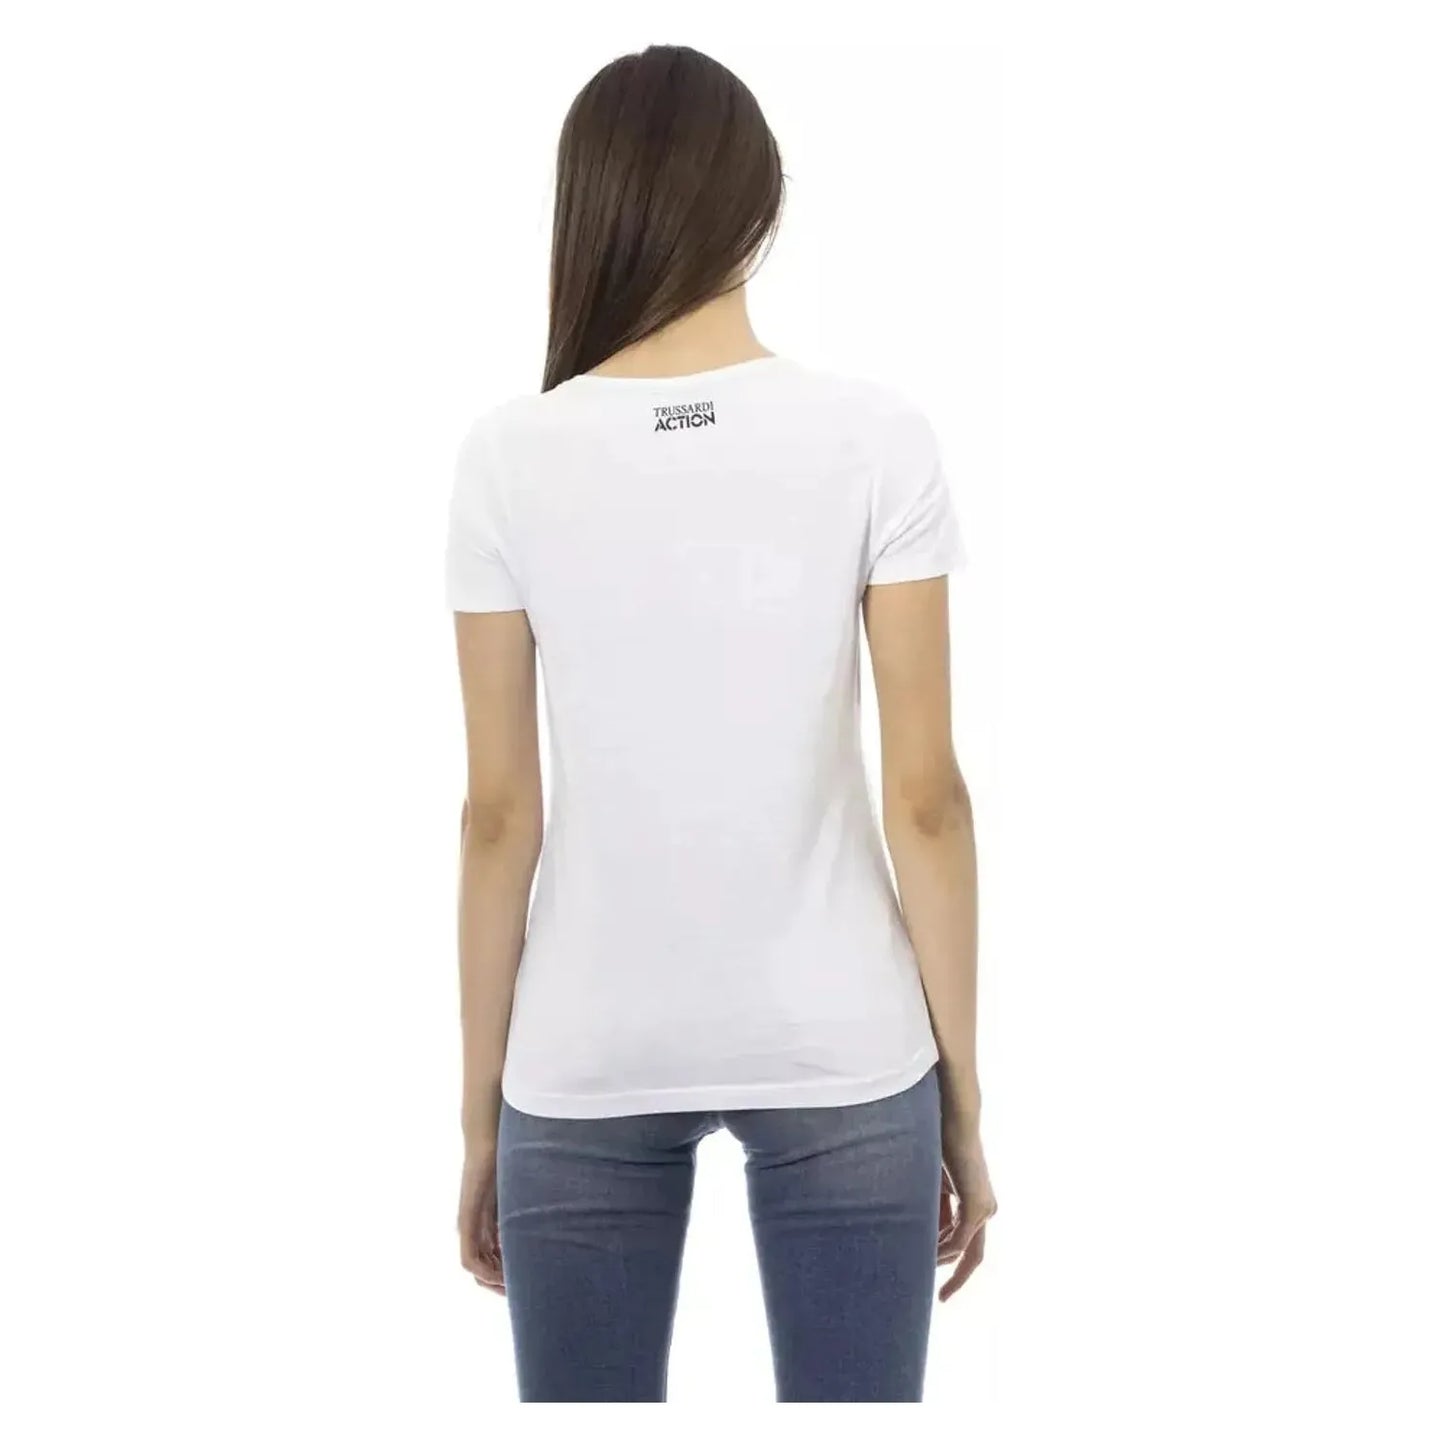 Trussardi Action Chic White Printed Round Neck Tee white-cotton-tops-t-shirt-98